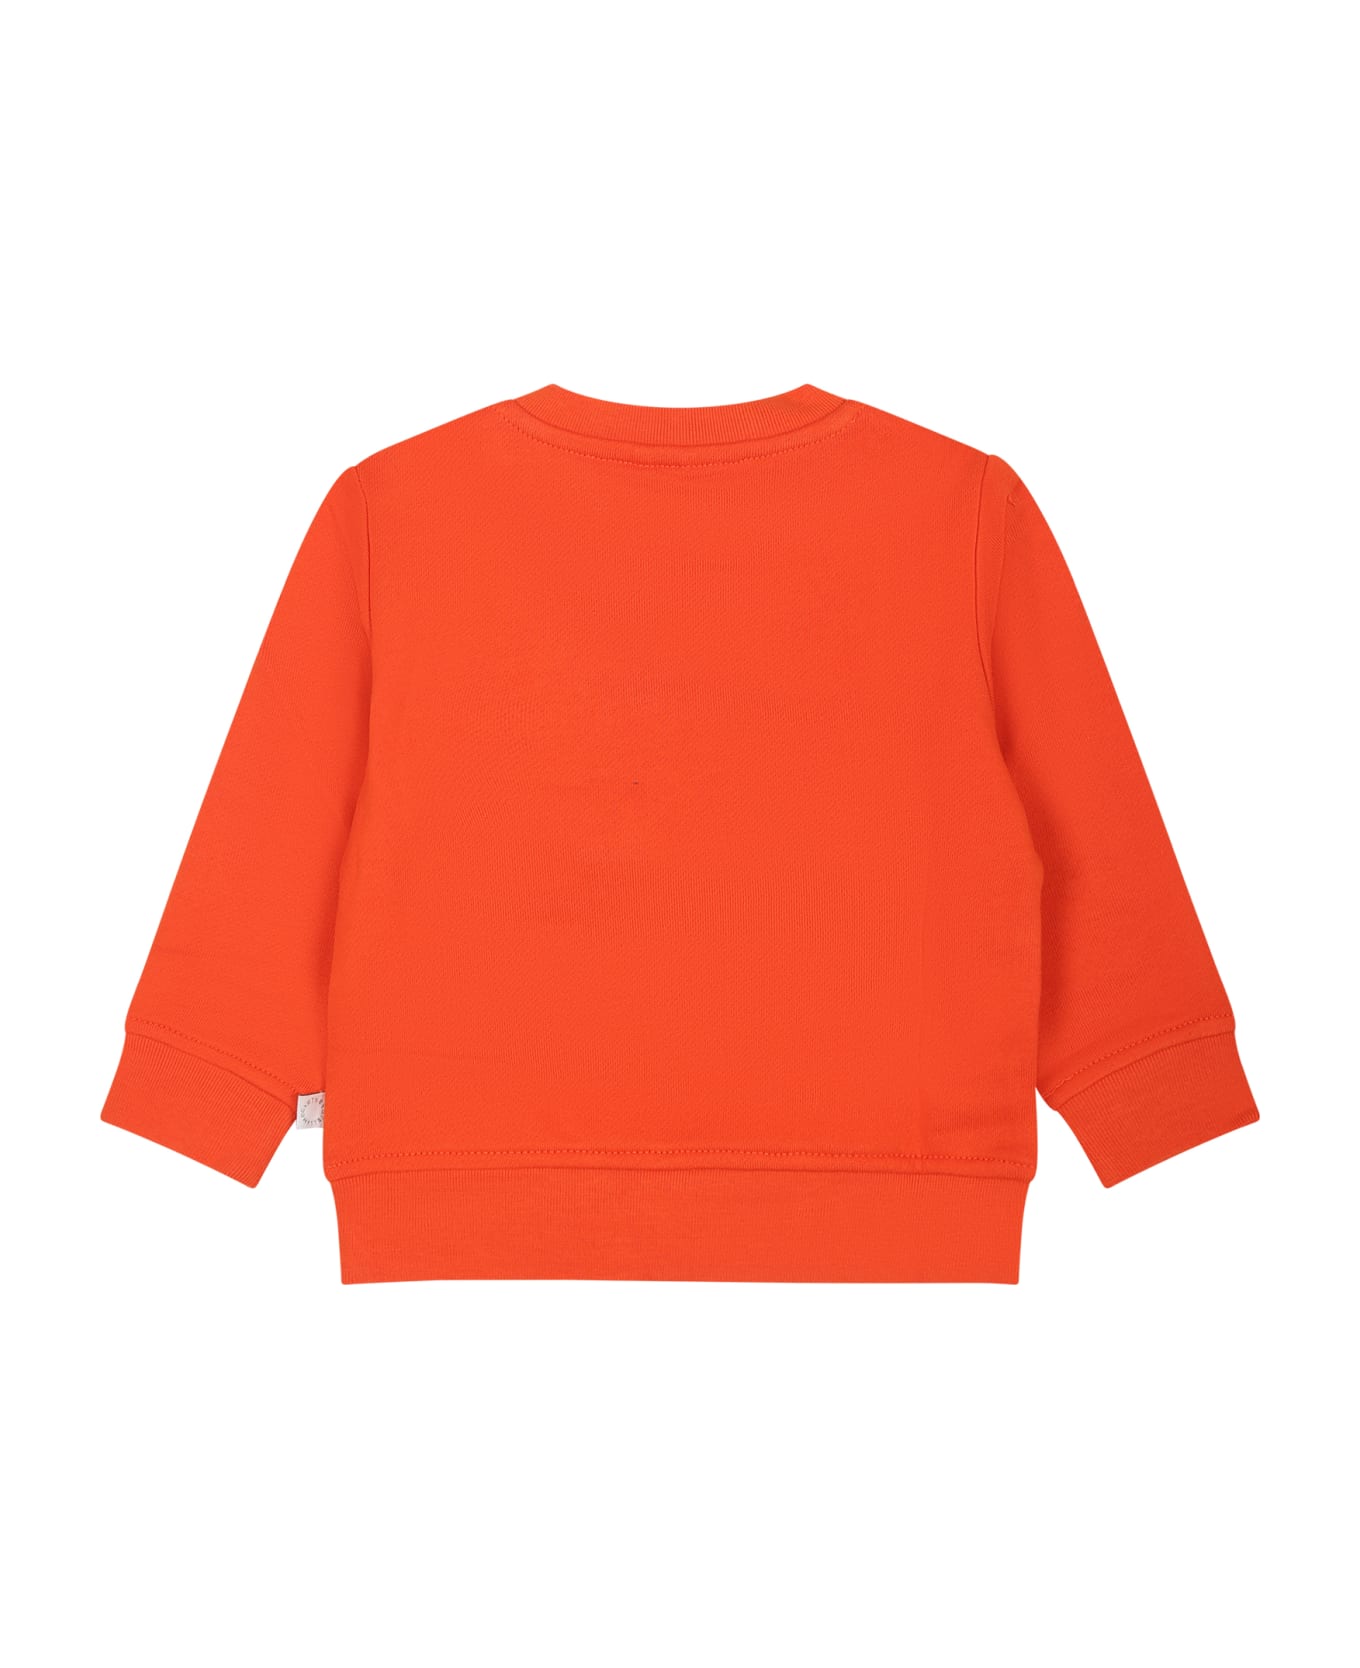 Stella McCartney Kids Orange Sweatshirt For Baby Girl With Flowesr And Logo - Orange